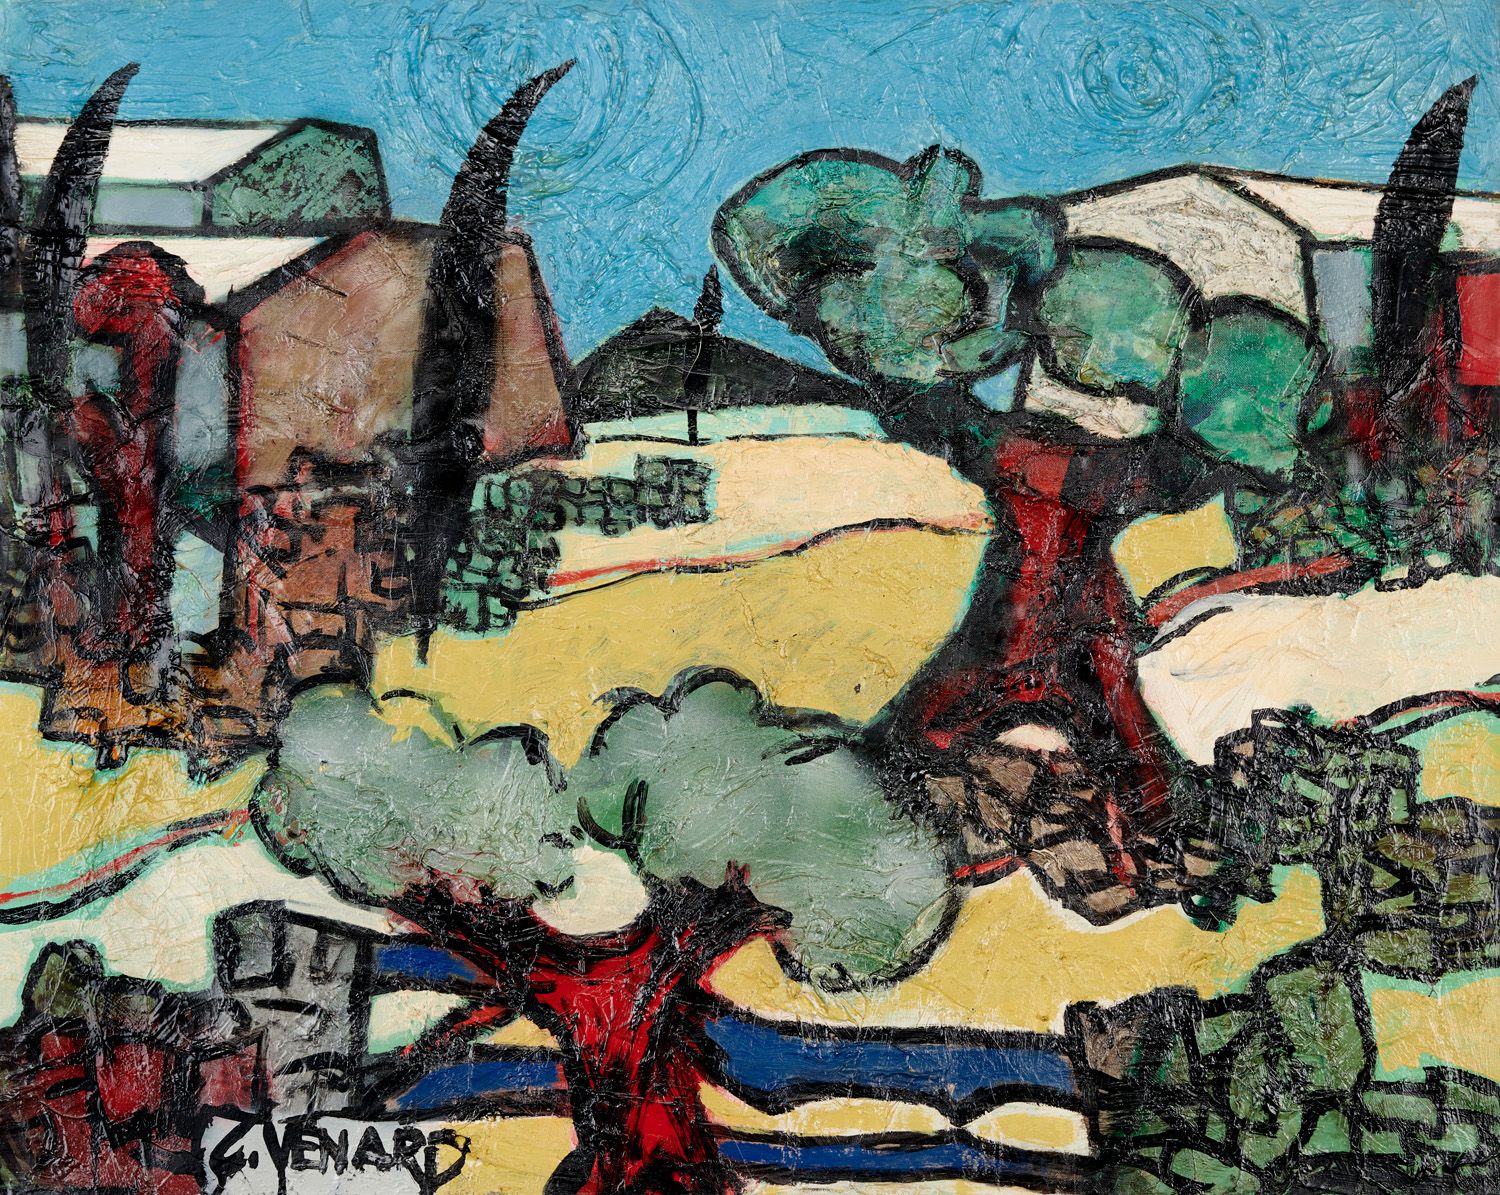 Null Claude VENARD 1913-1999

普罗旺斯村，1962年

画布油画，左下方有签名，背面有日期

73 x 92

(恢复)